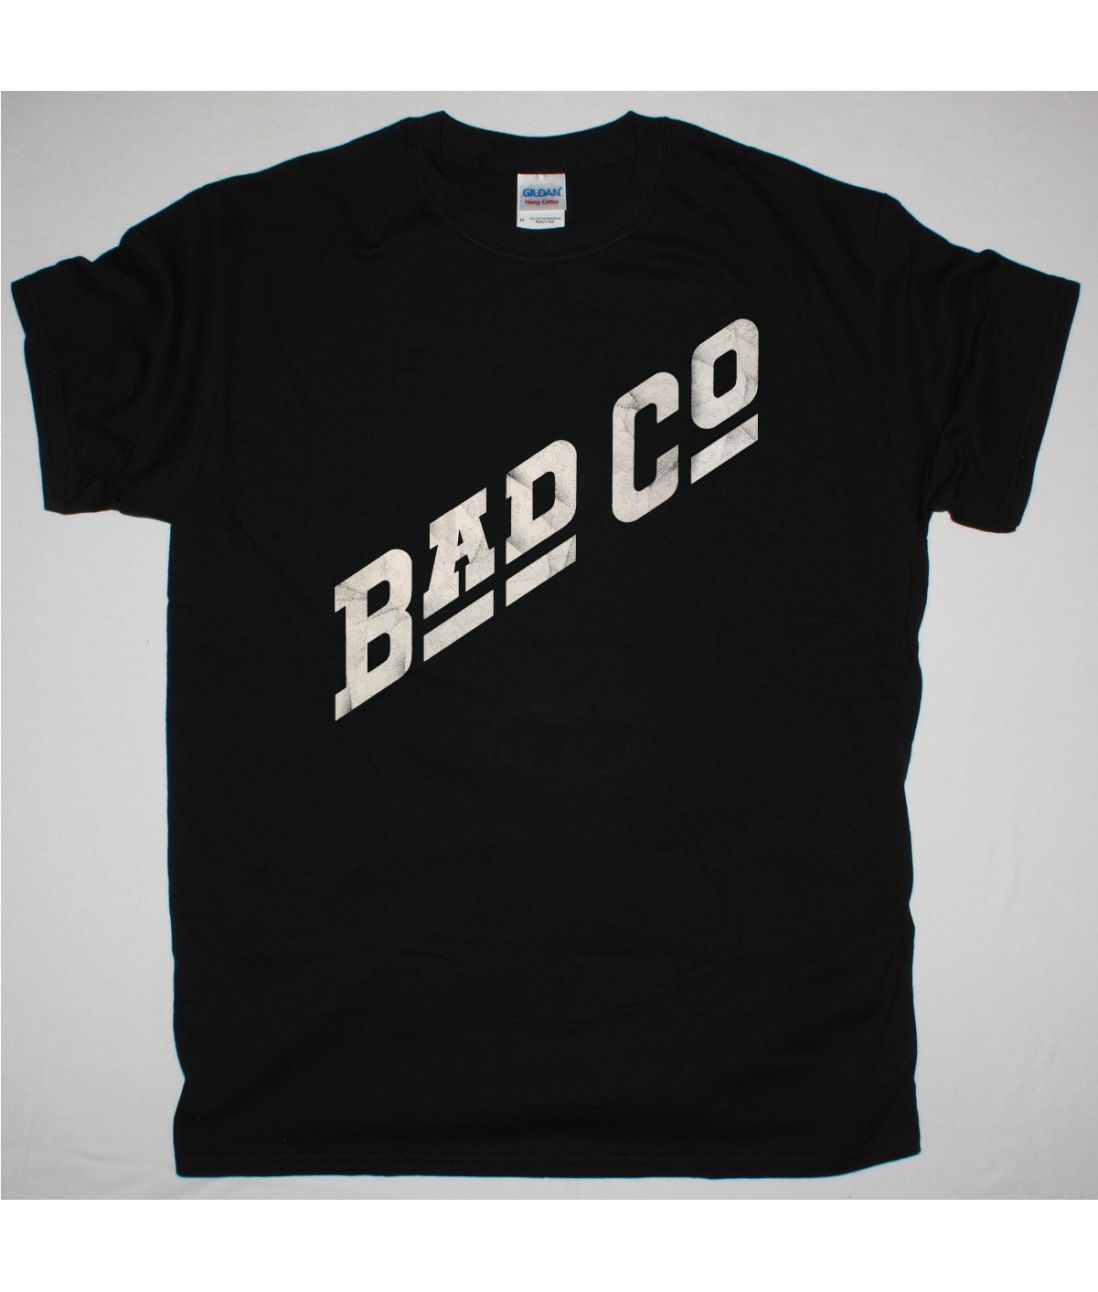 BAD COMPANY LOGO NEW T SHIRT - Best T-shirts